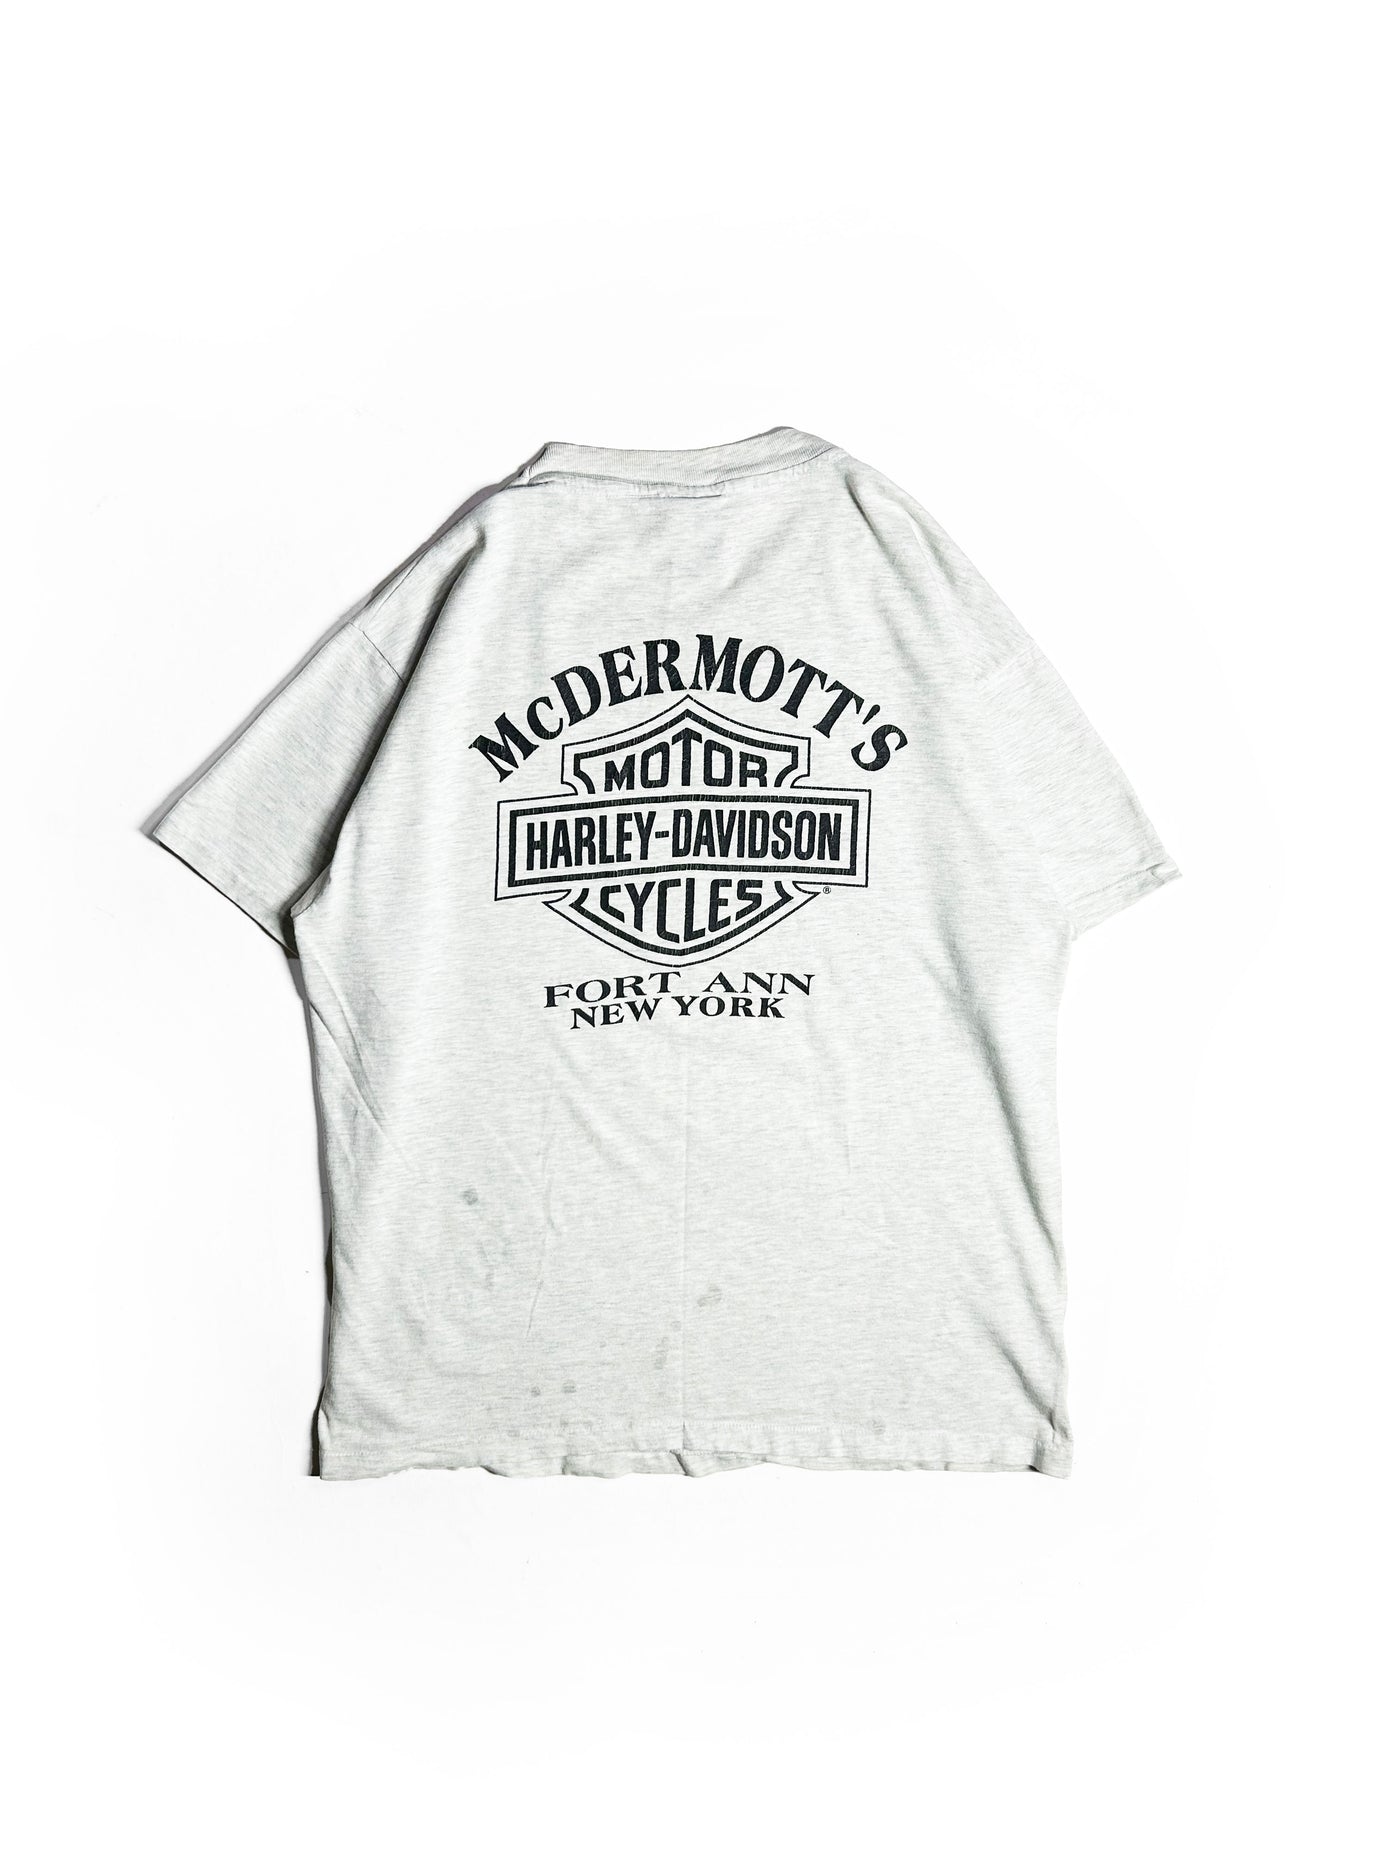 Vintage 1996 Harley Davidson Olympic T-Shirt